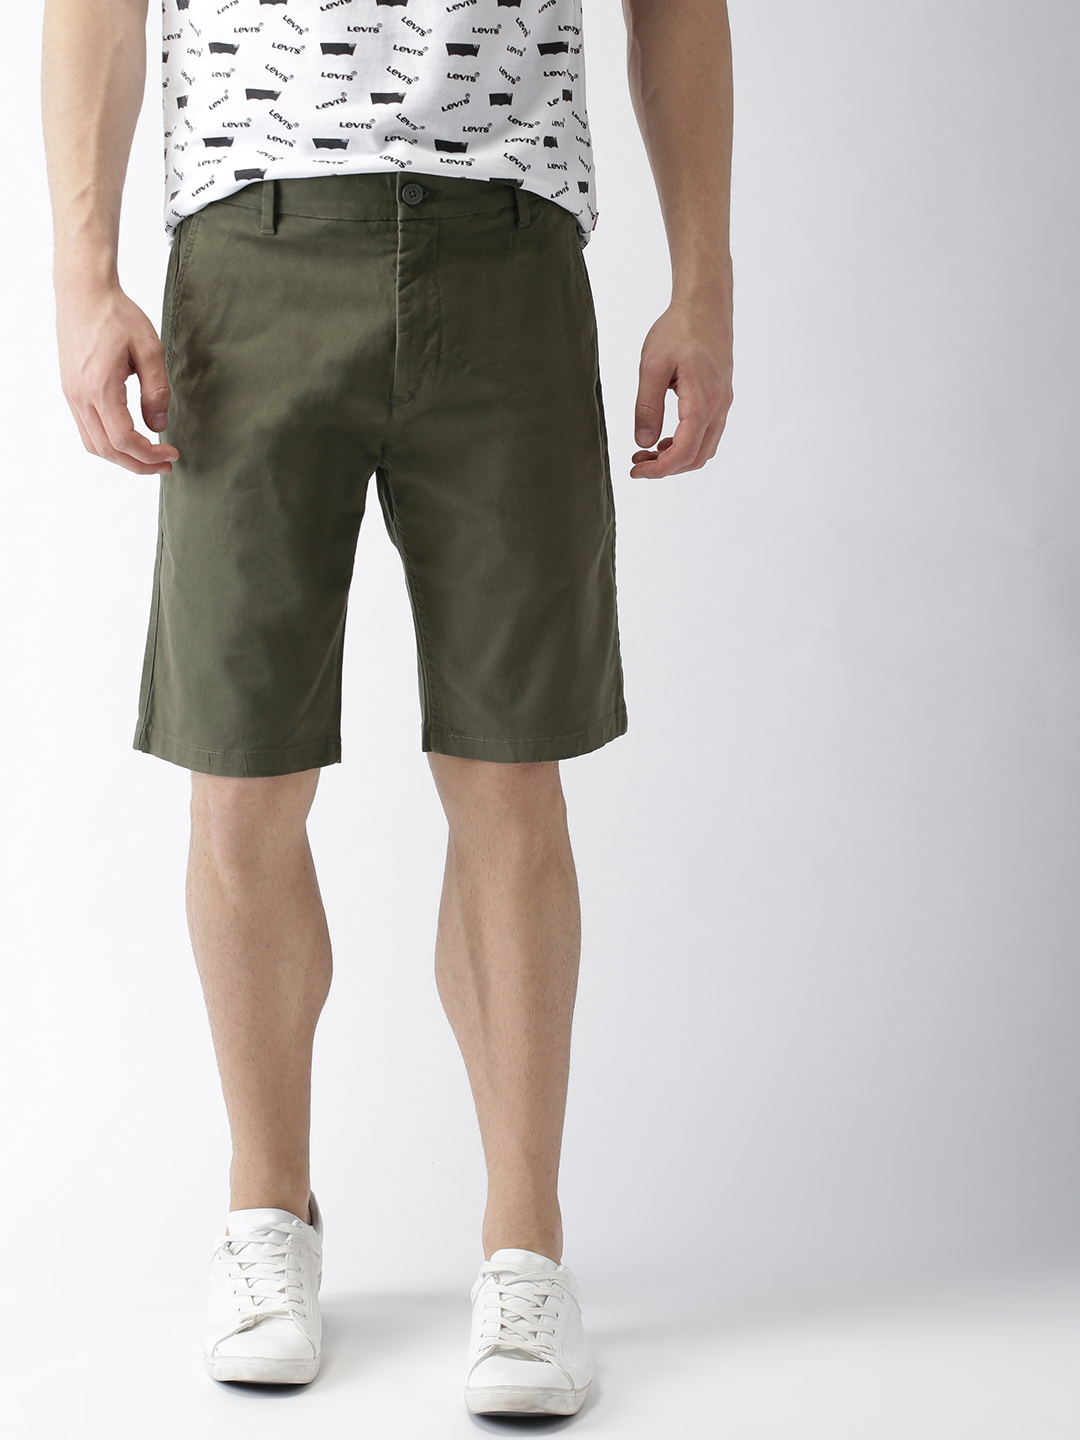 levis 502 chino shorts